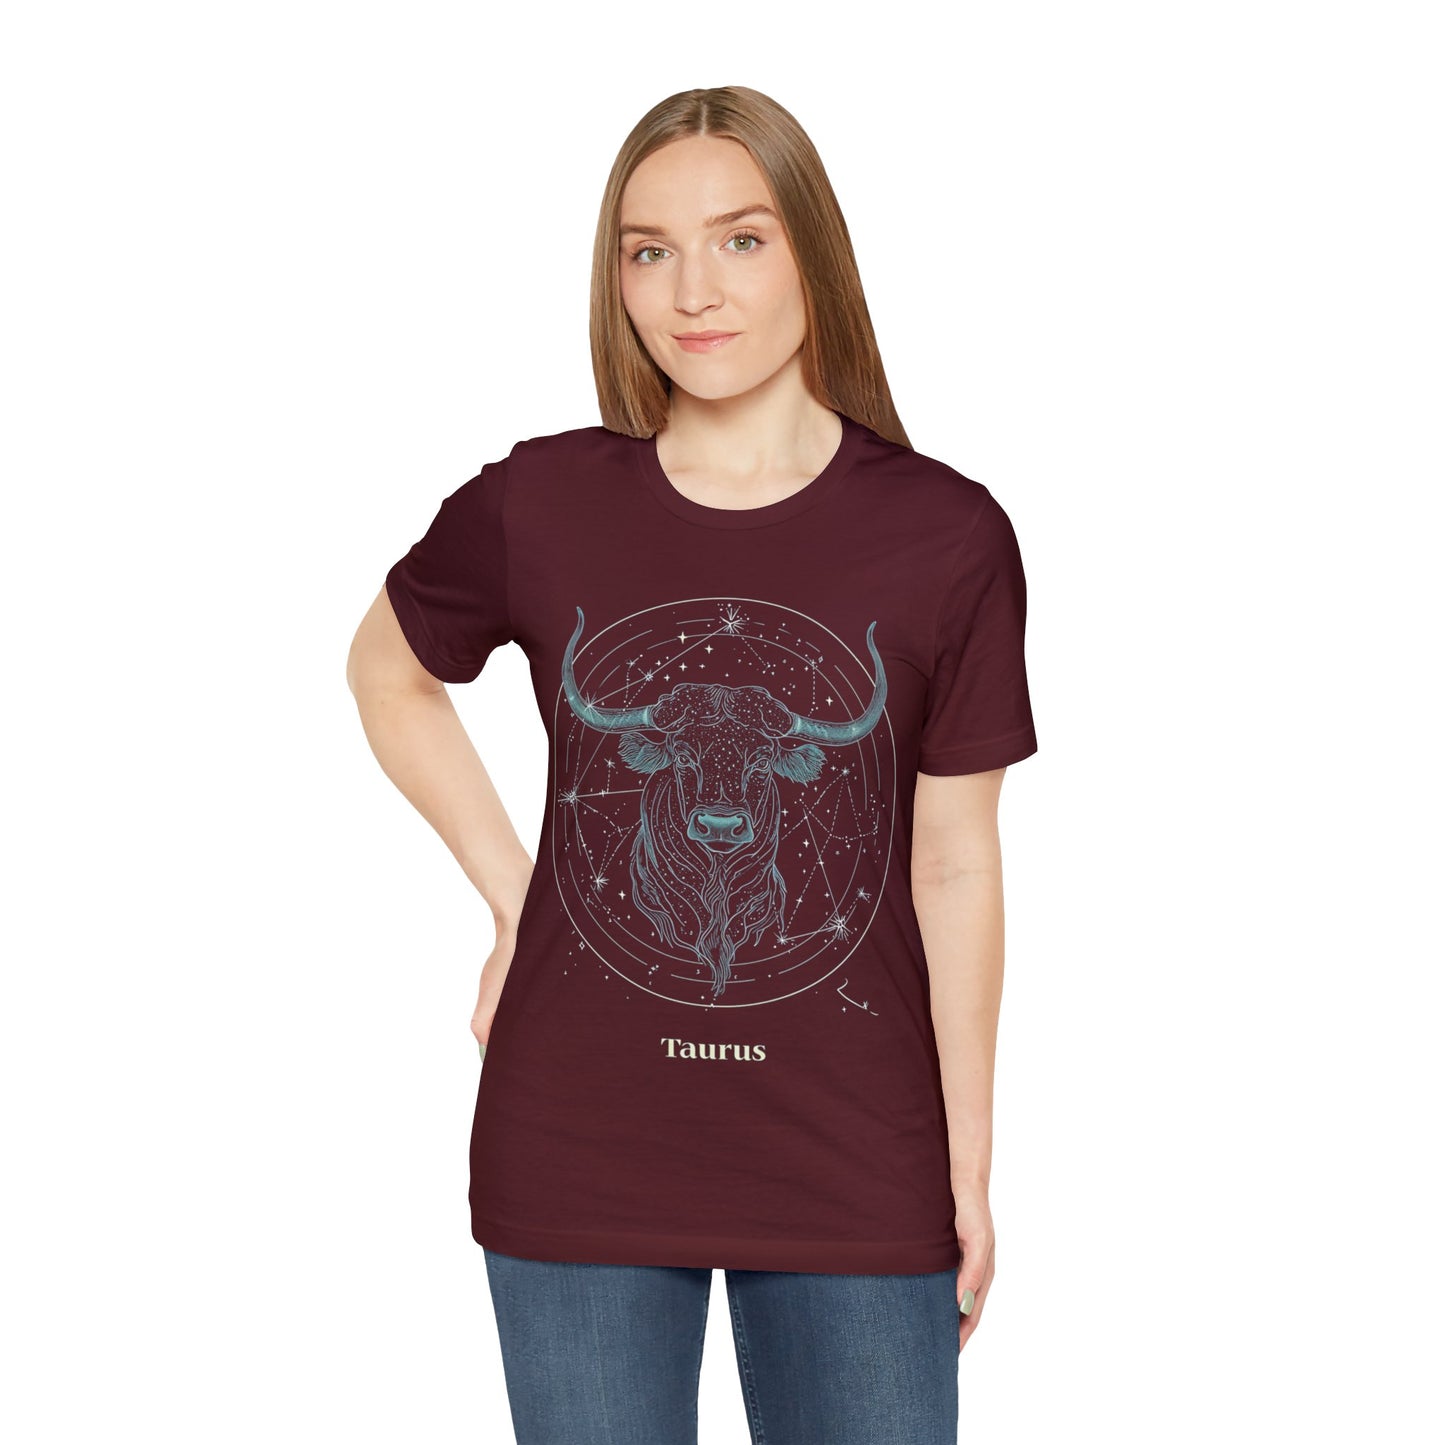 Taurus Steadfast Bull T-Shirt